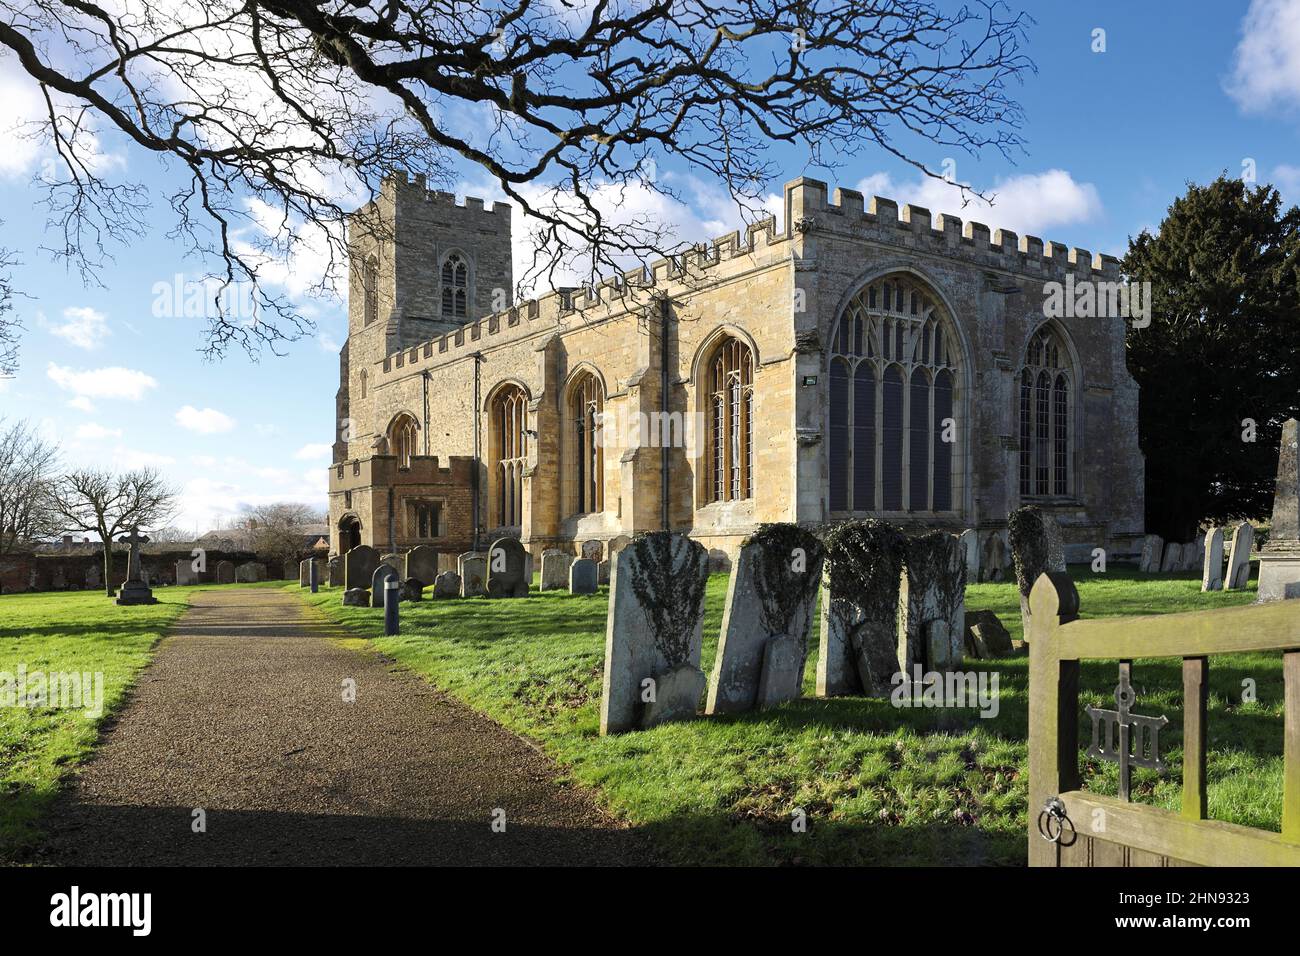 St Lawrence Church and churchyard, Willington, Bedfordshire, UK Stock Photo